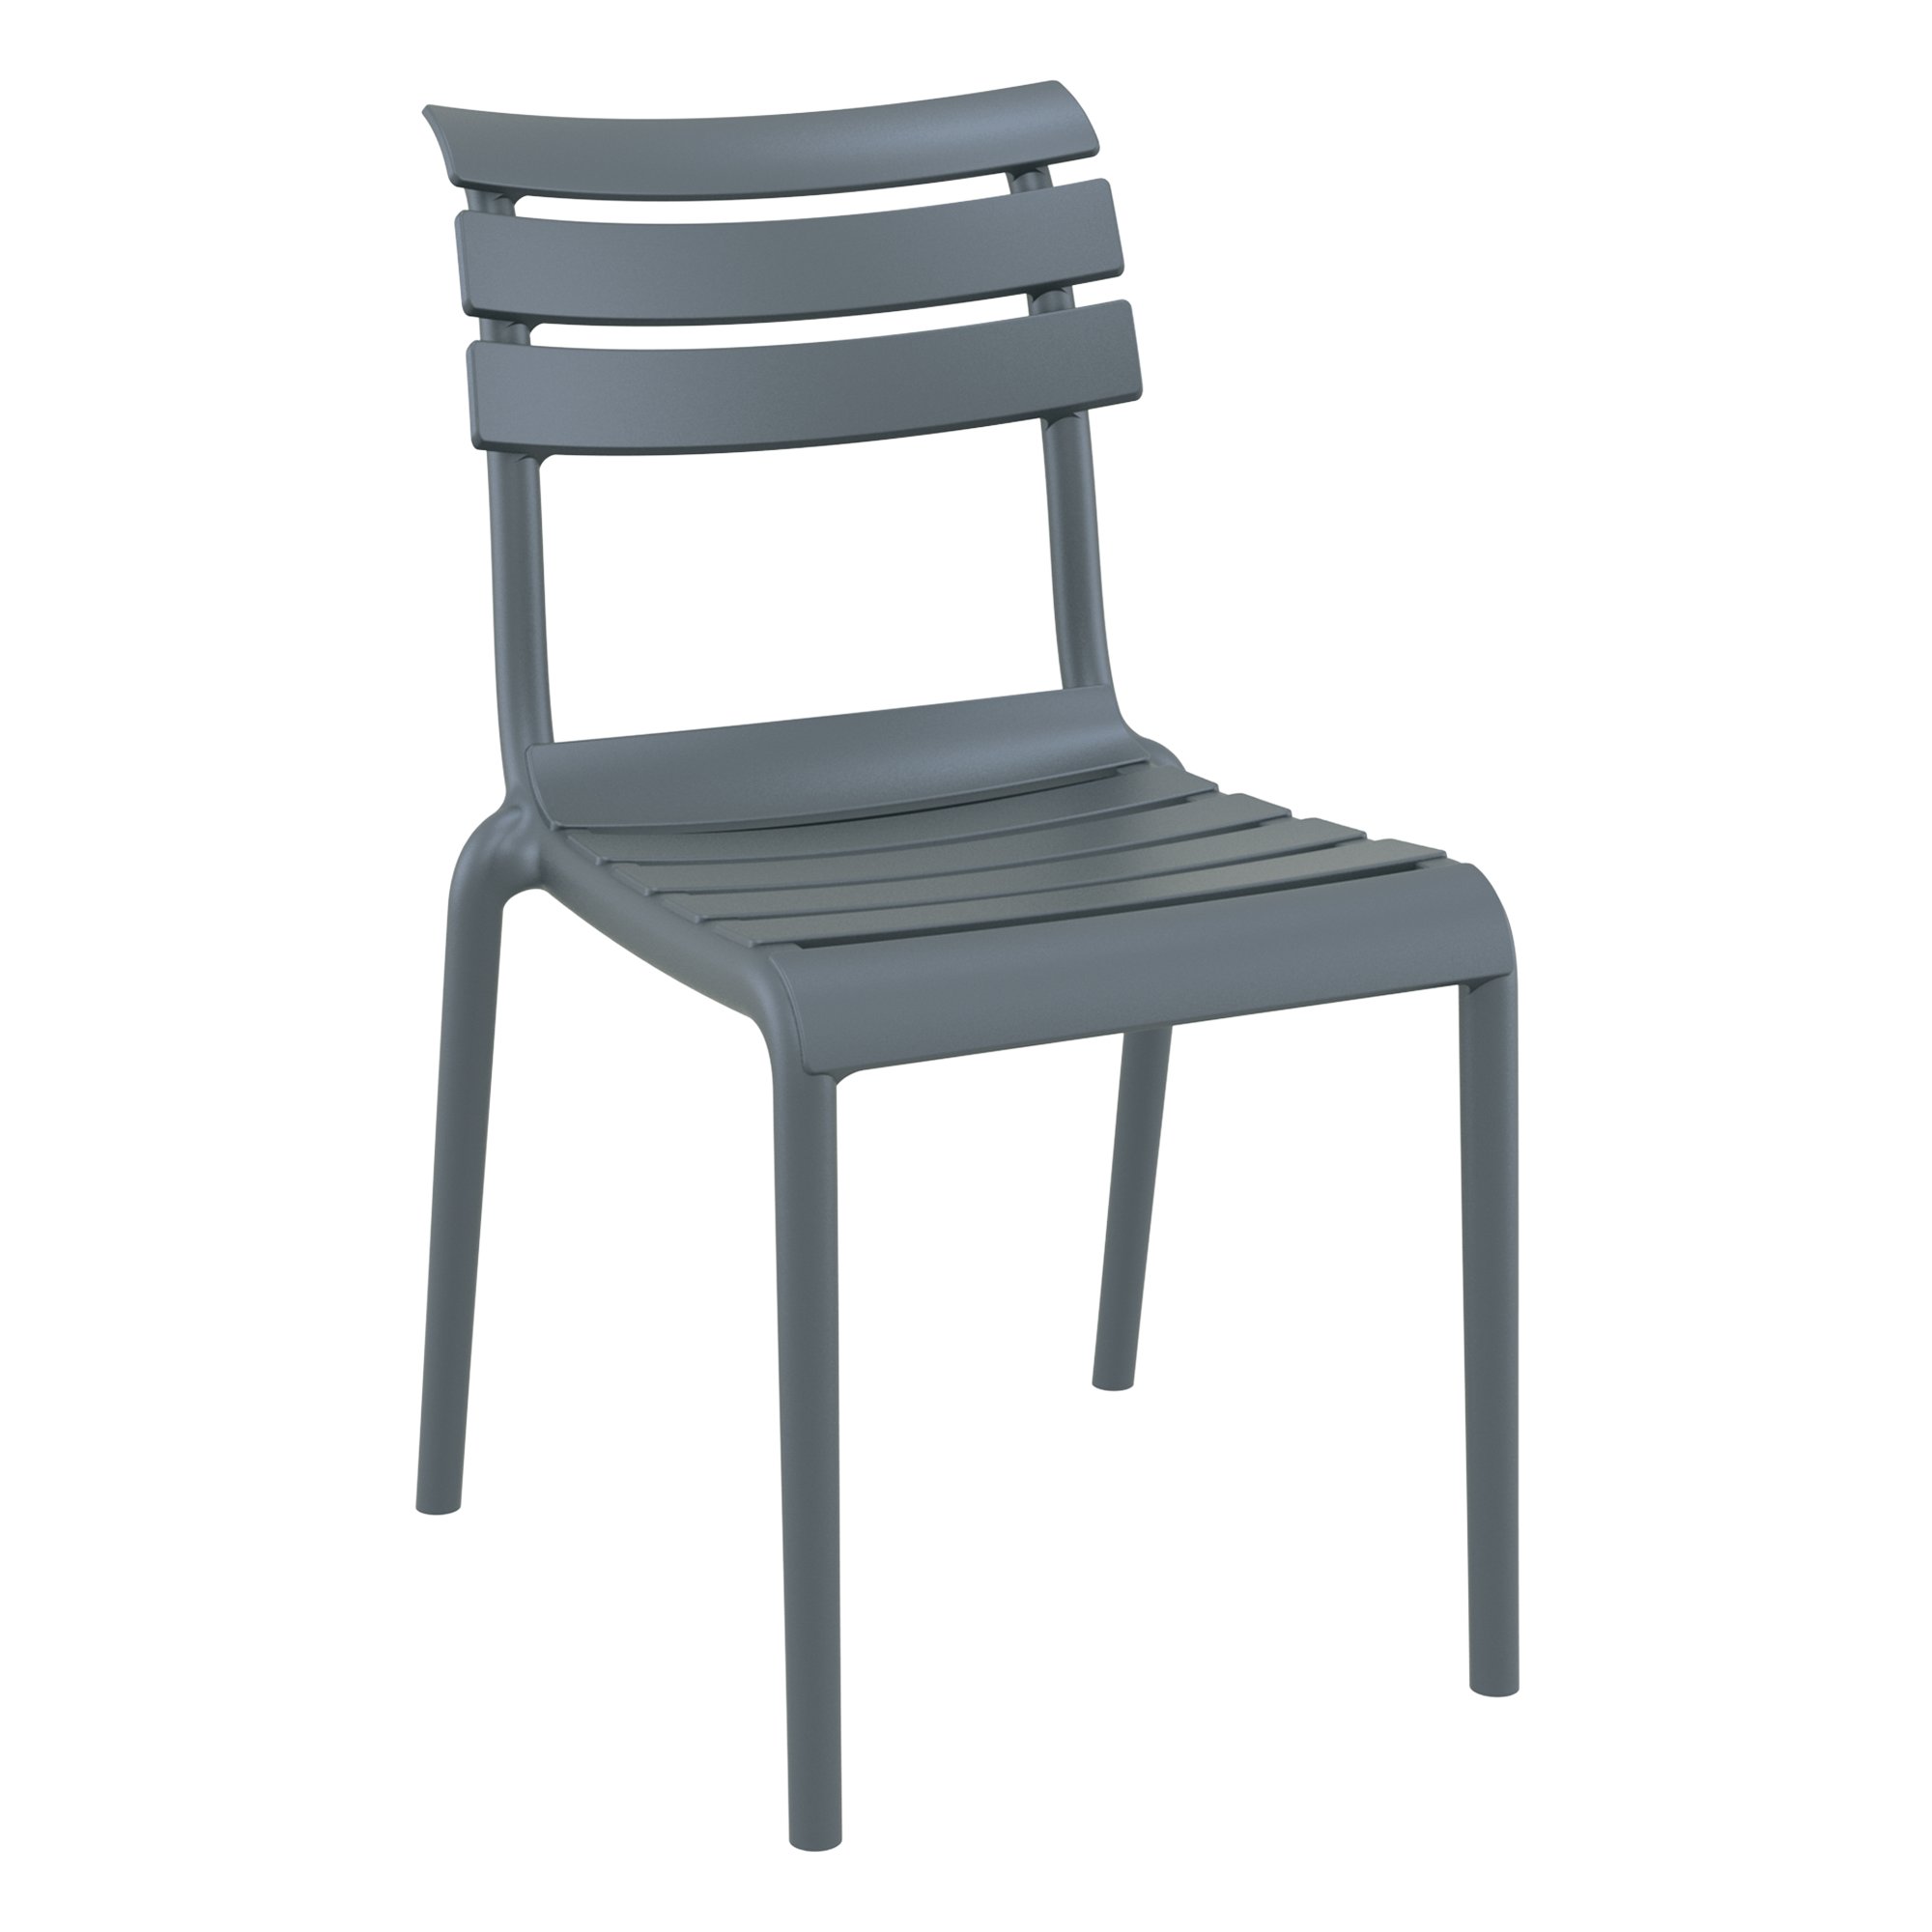 Dark Grey Marketa Stackable Chair for Indoor and Outdoor Use